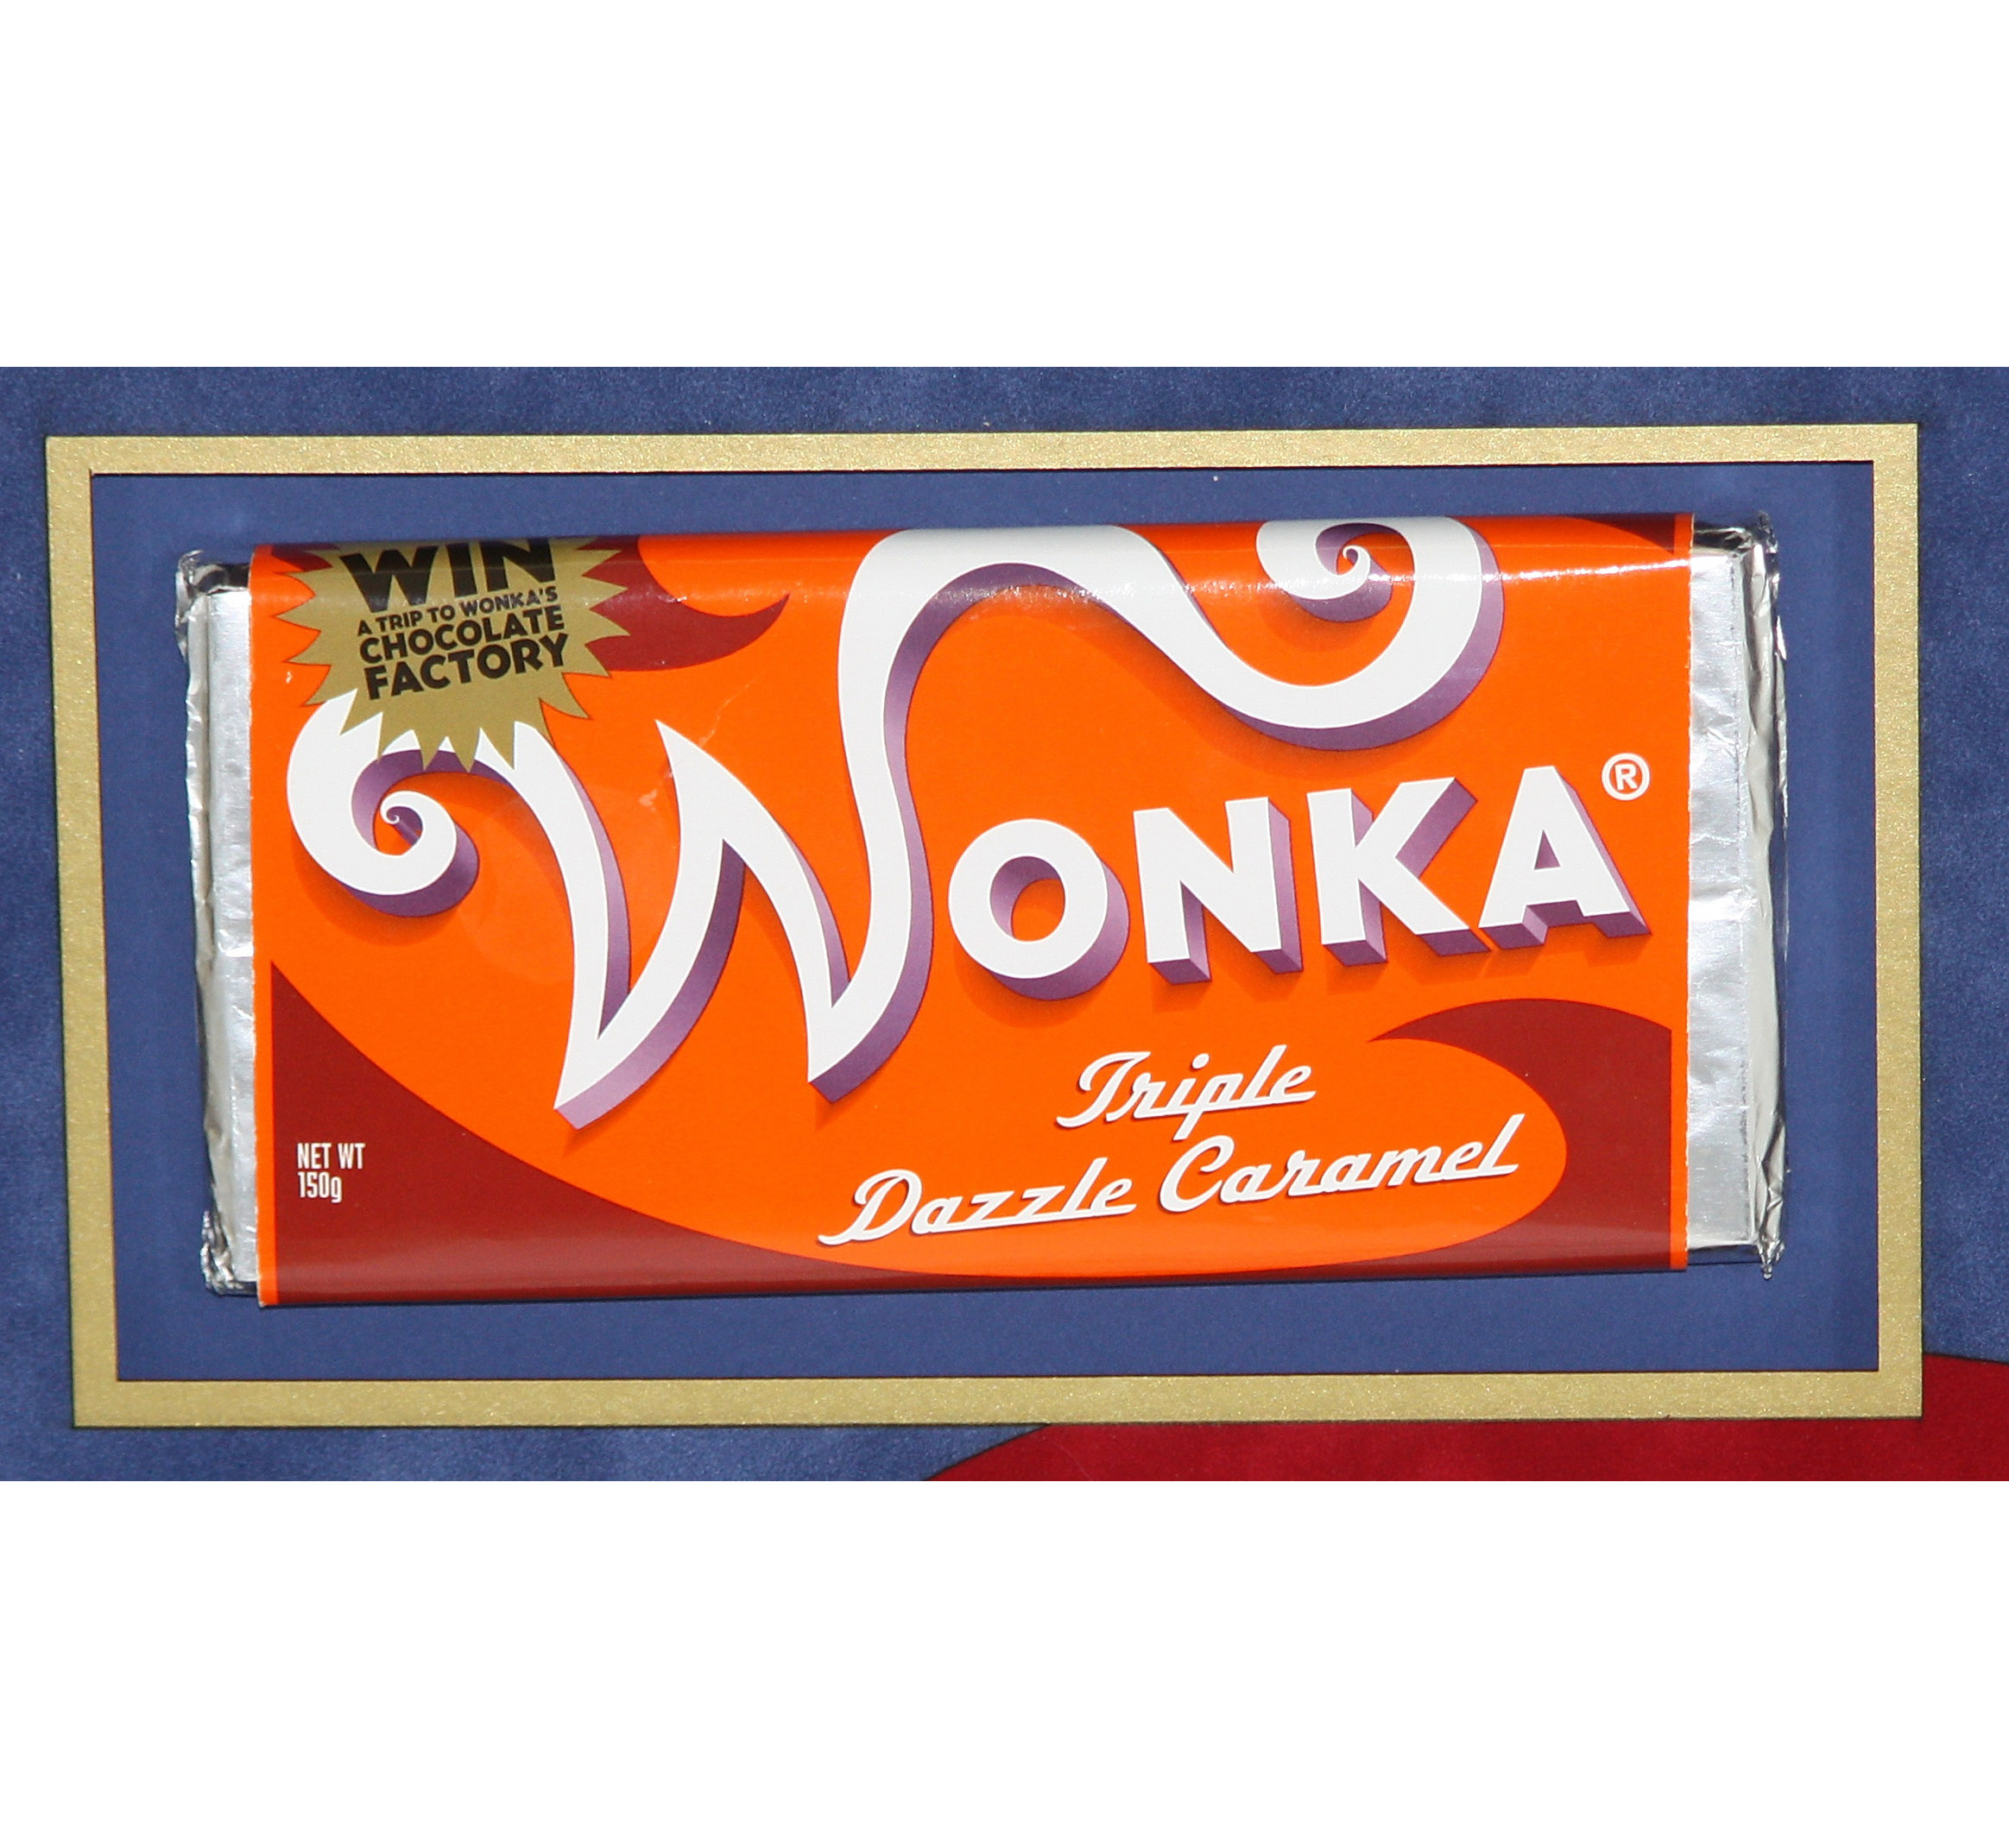 A Wonka Bar from Tim Burton's 2005 Film Charlie and the Chocolate